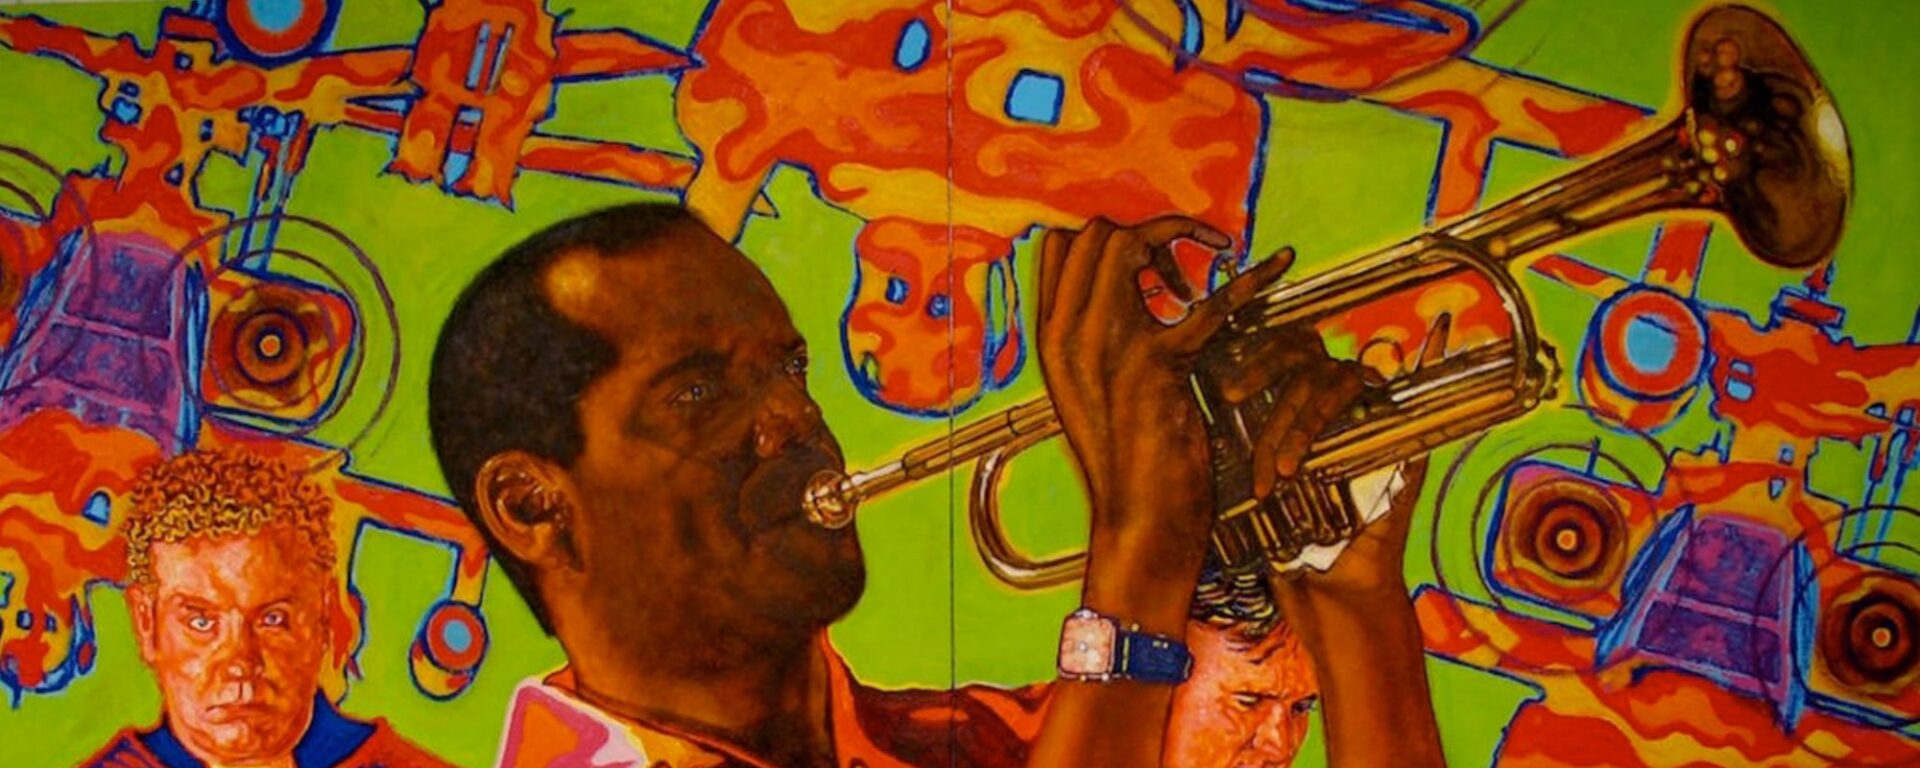 A vivid illustration of a trumpeter